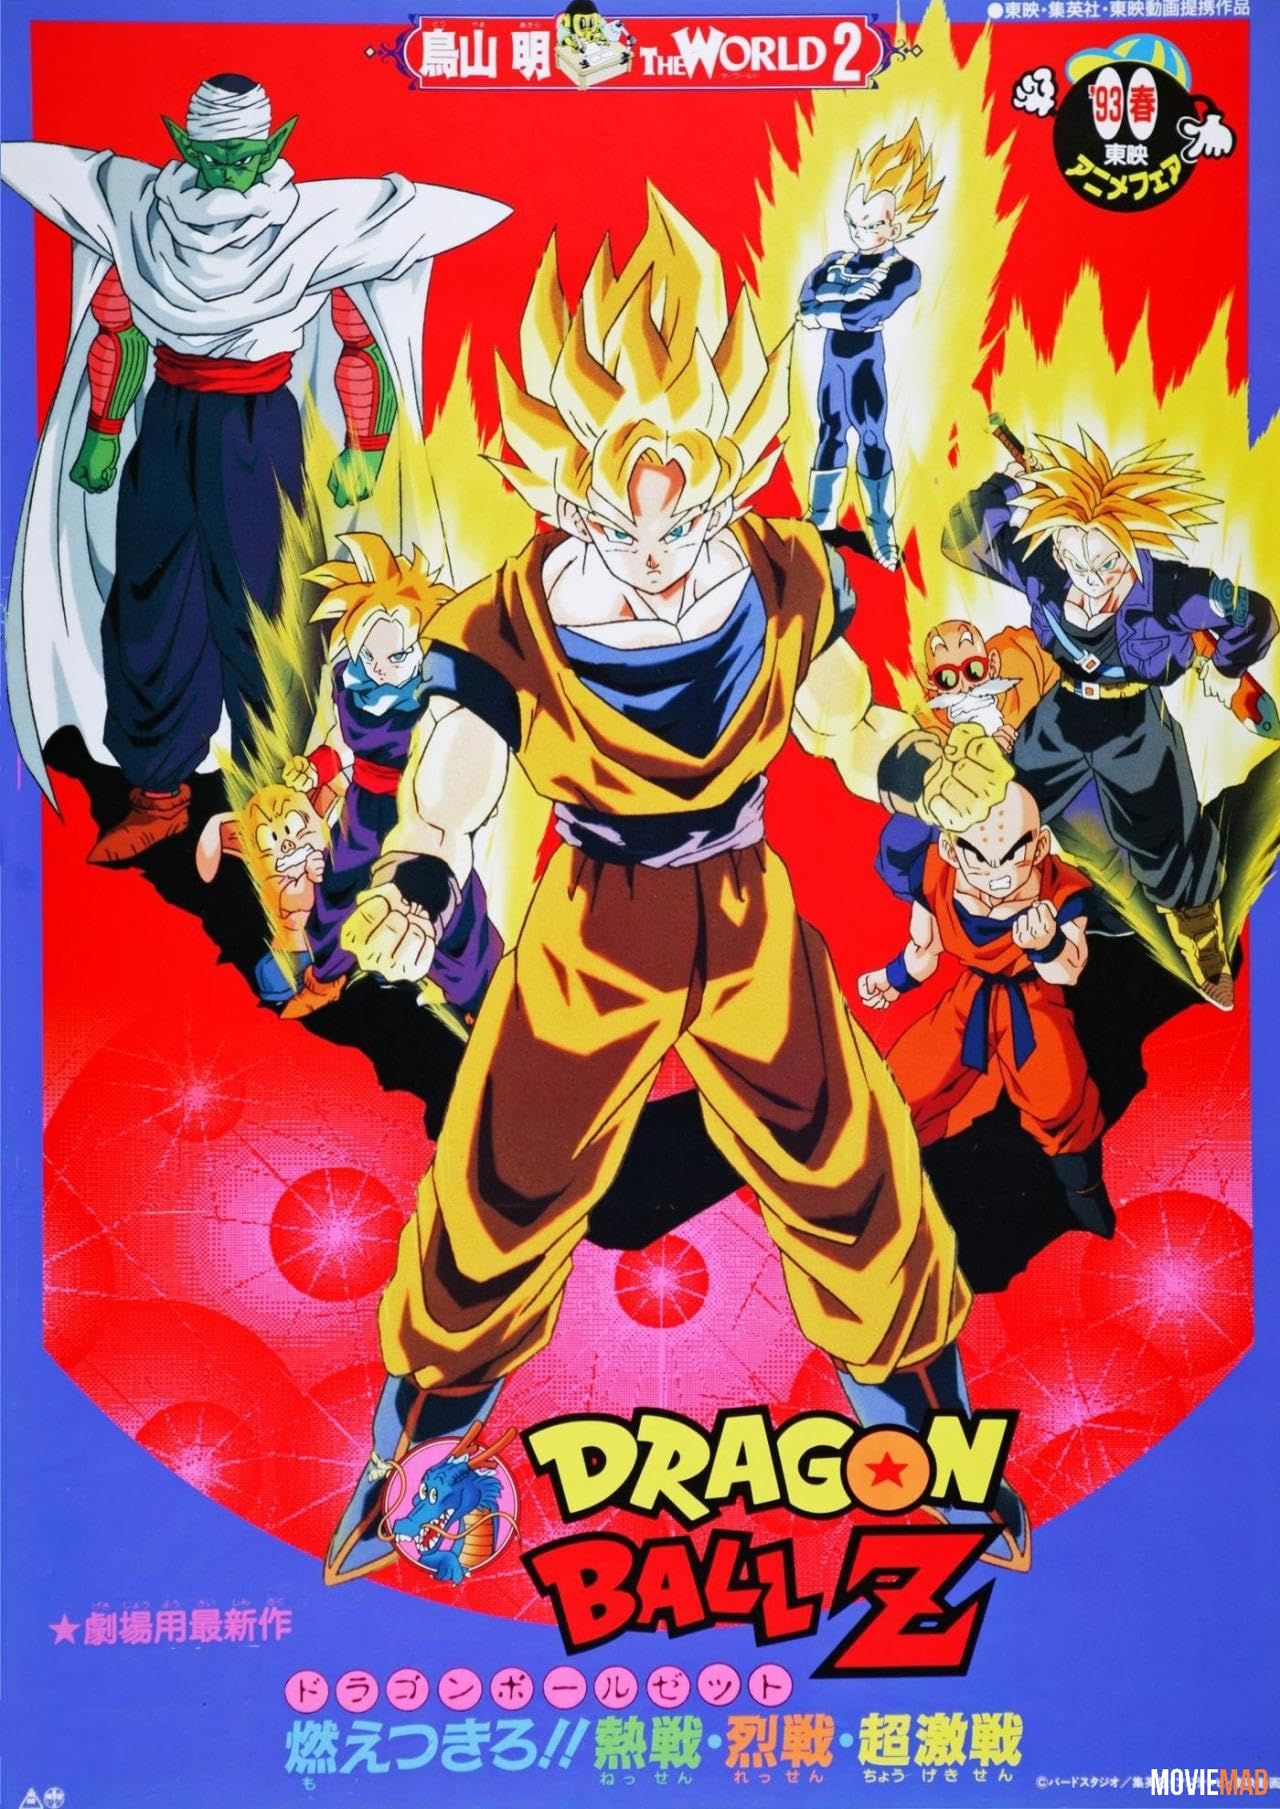 Dragon Ball Z Broly - The Legendary Super Saiyan (1993) Hindi Dubbed ORG HDRip Full Movie 720p 480p